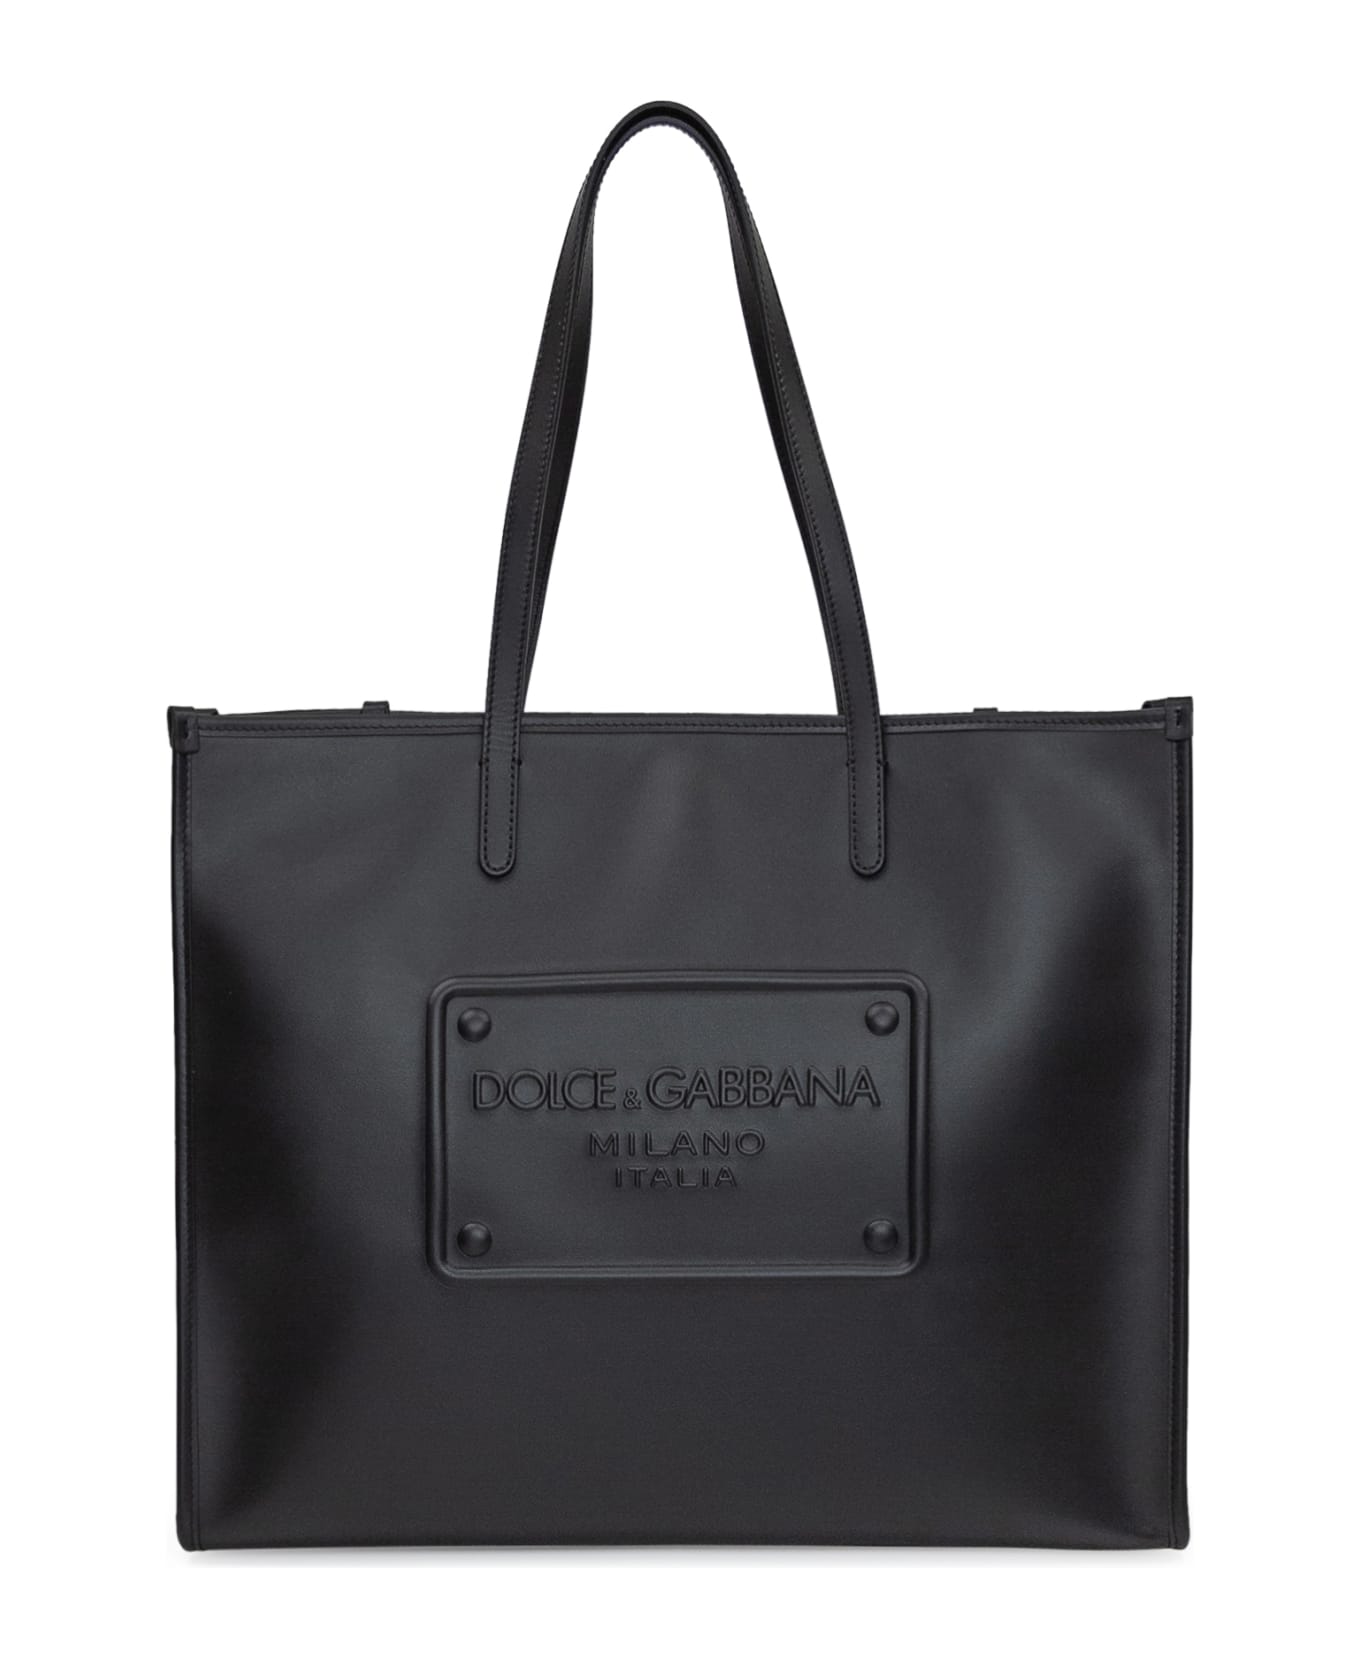 Dolce & Gabbana Black Leather Shopper - Black